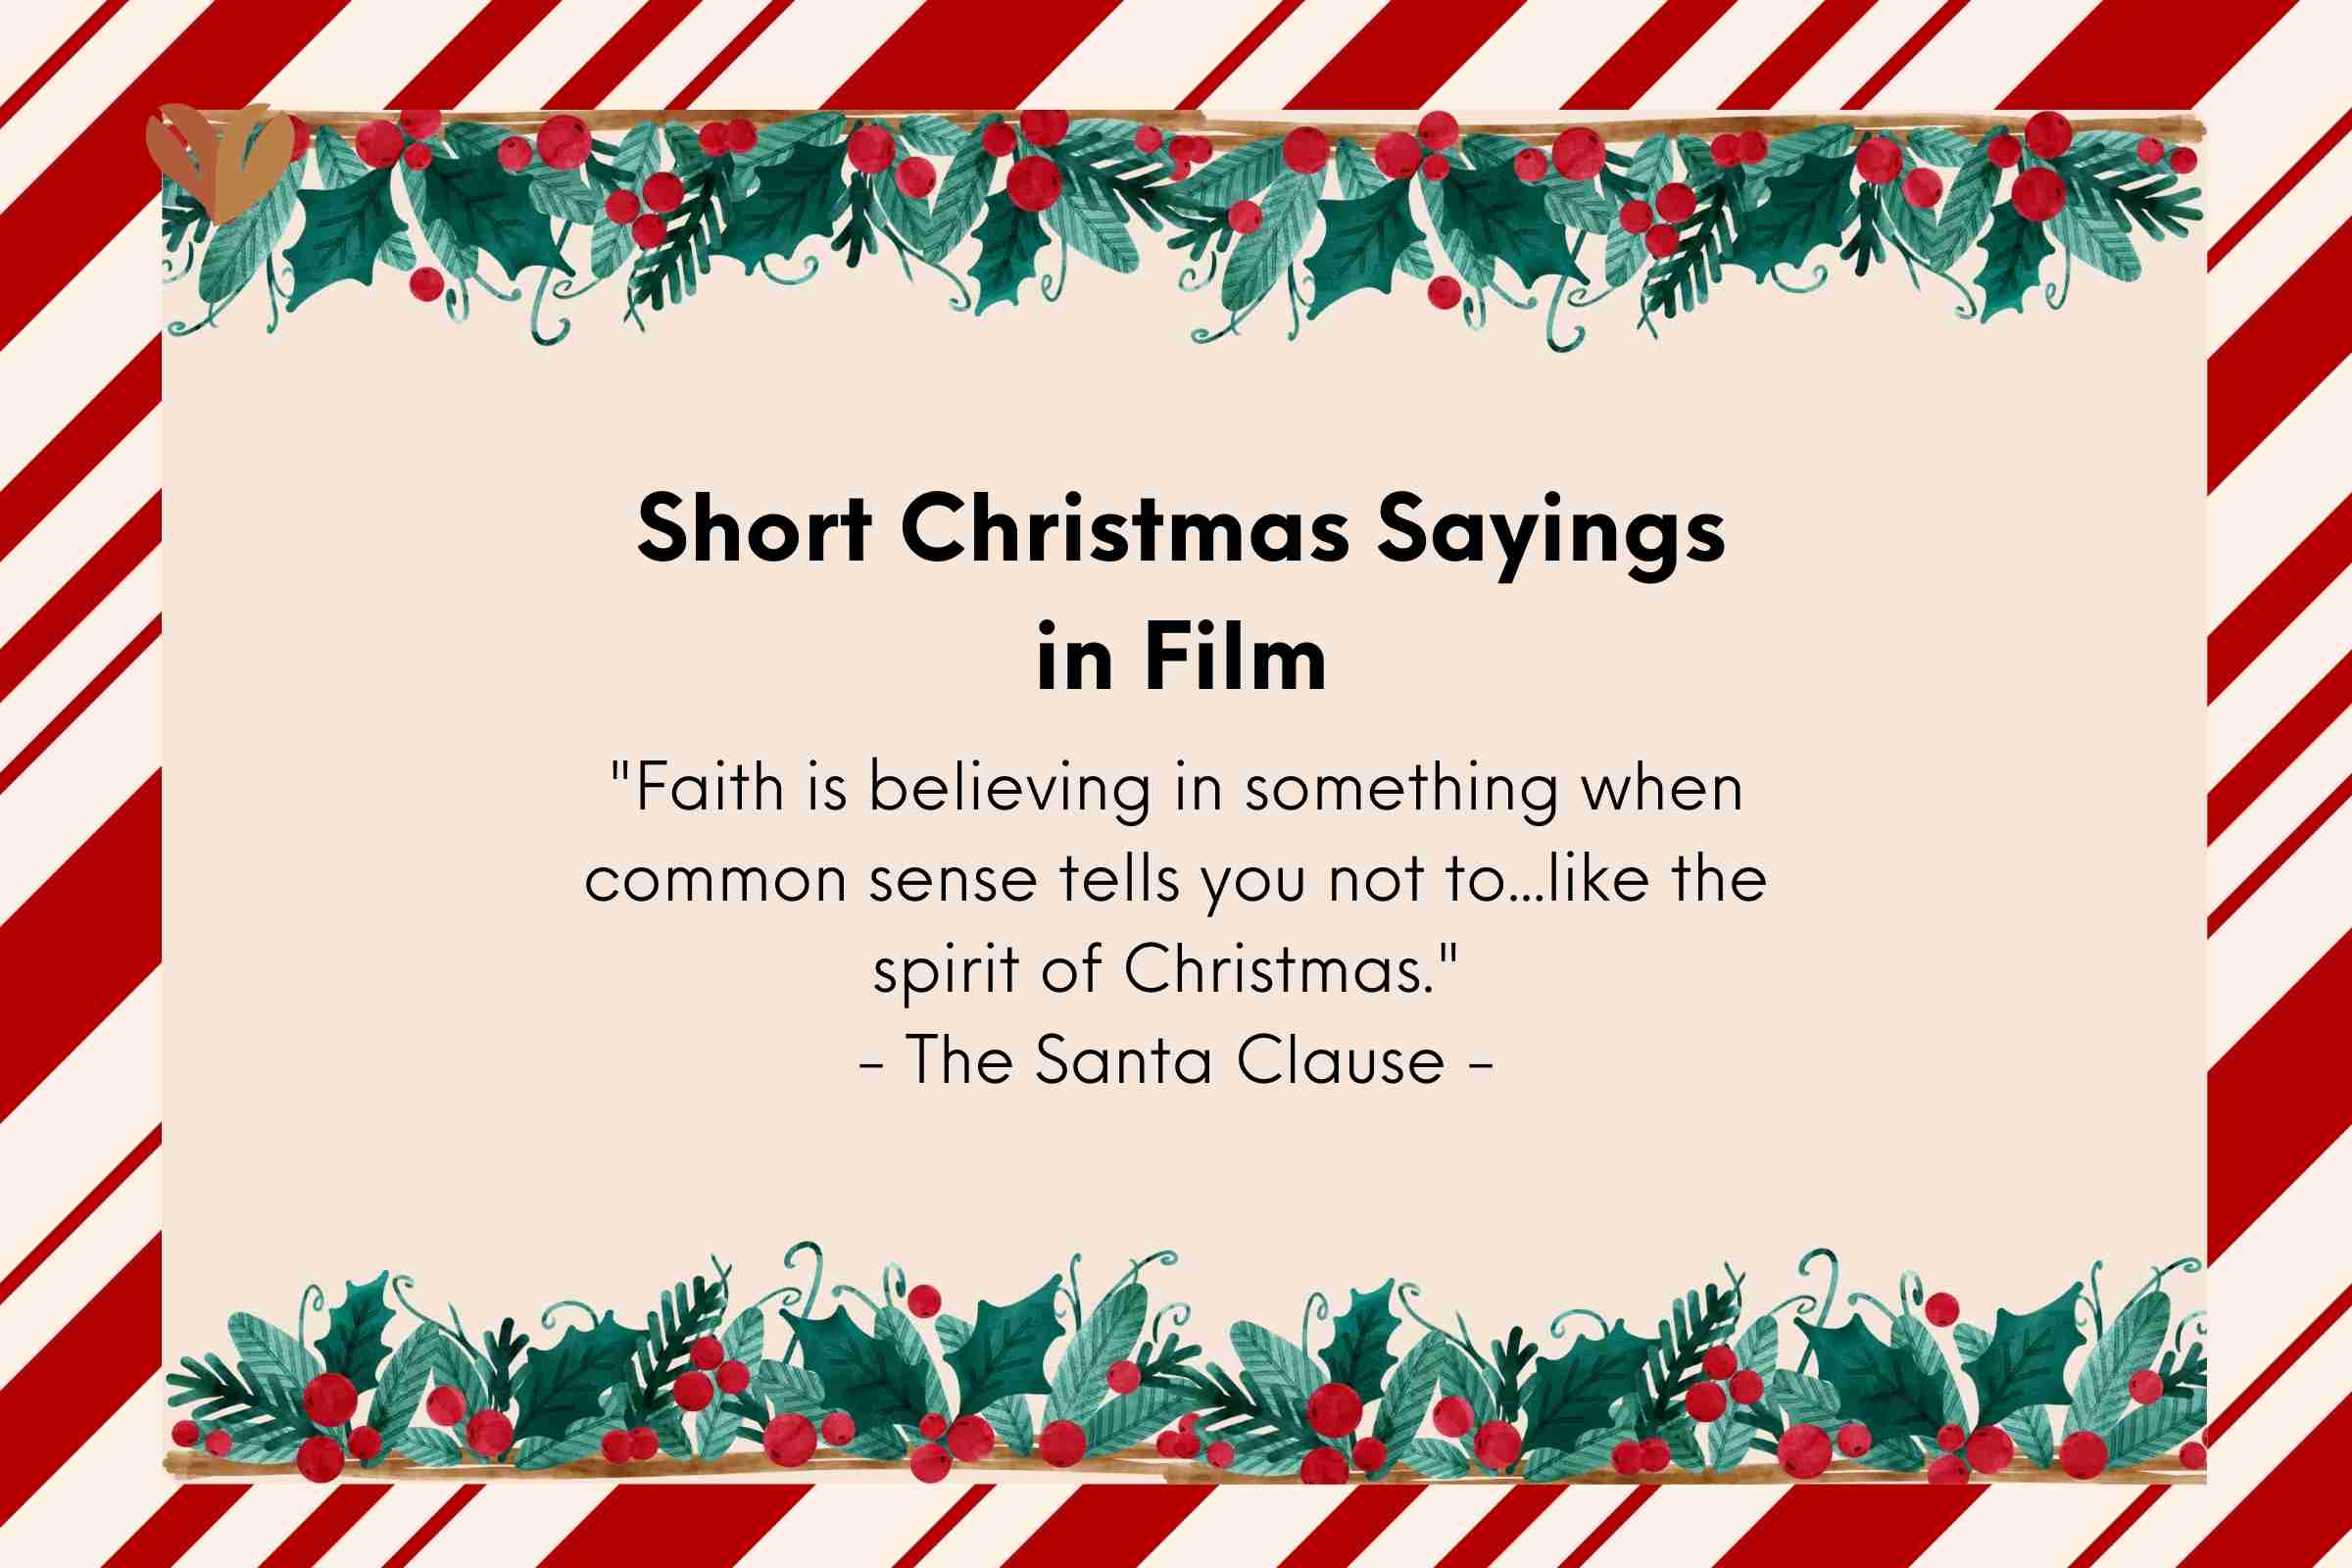 Short Christmas Sayings in Film